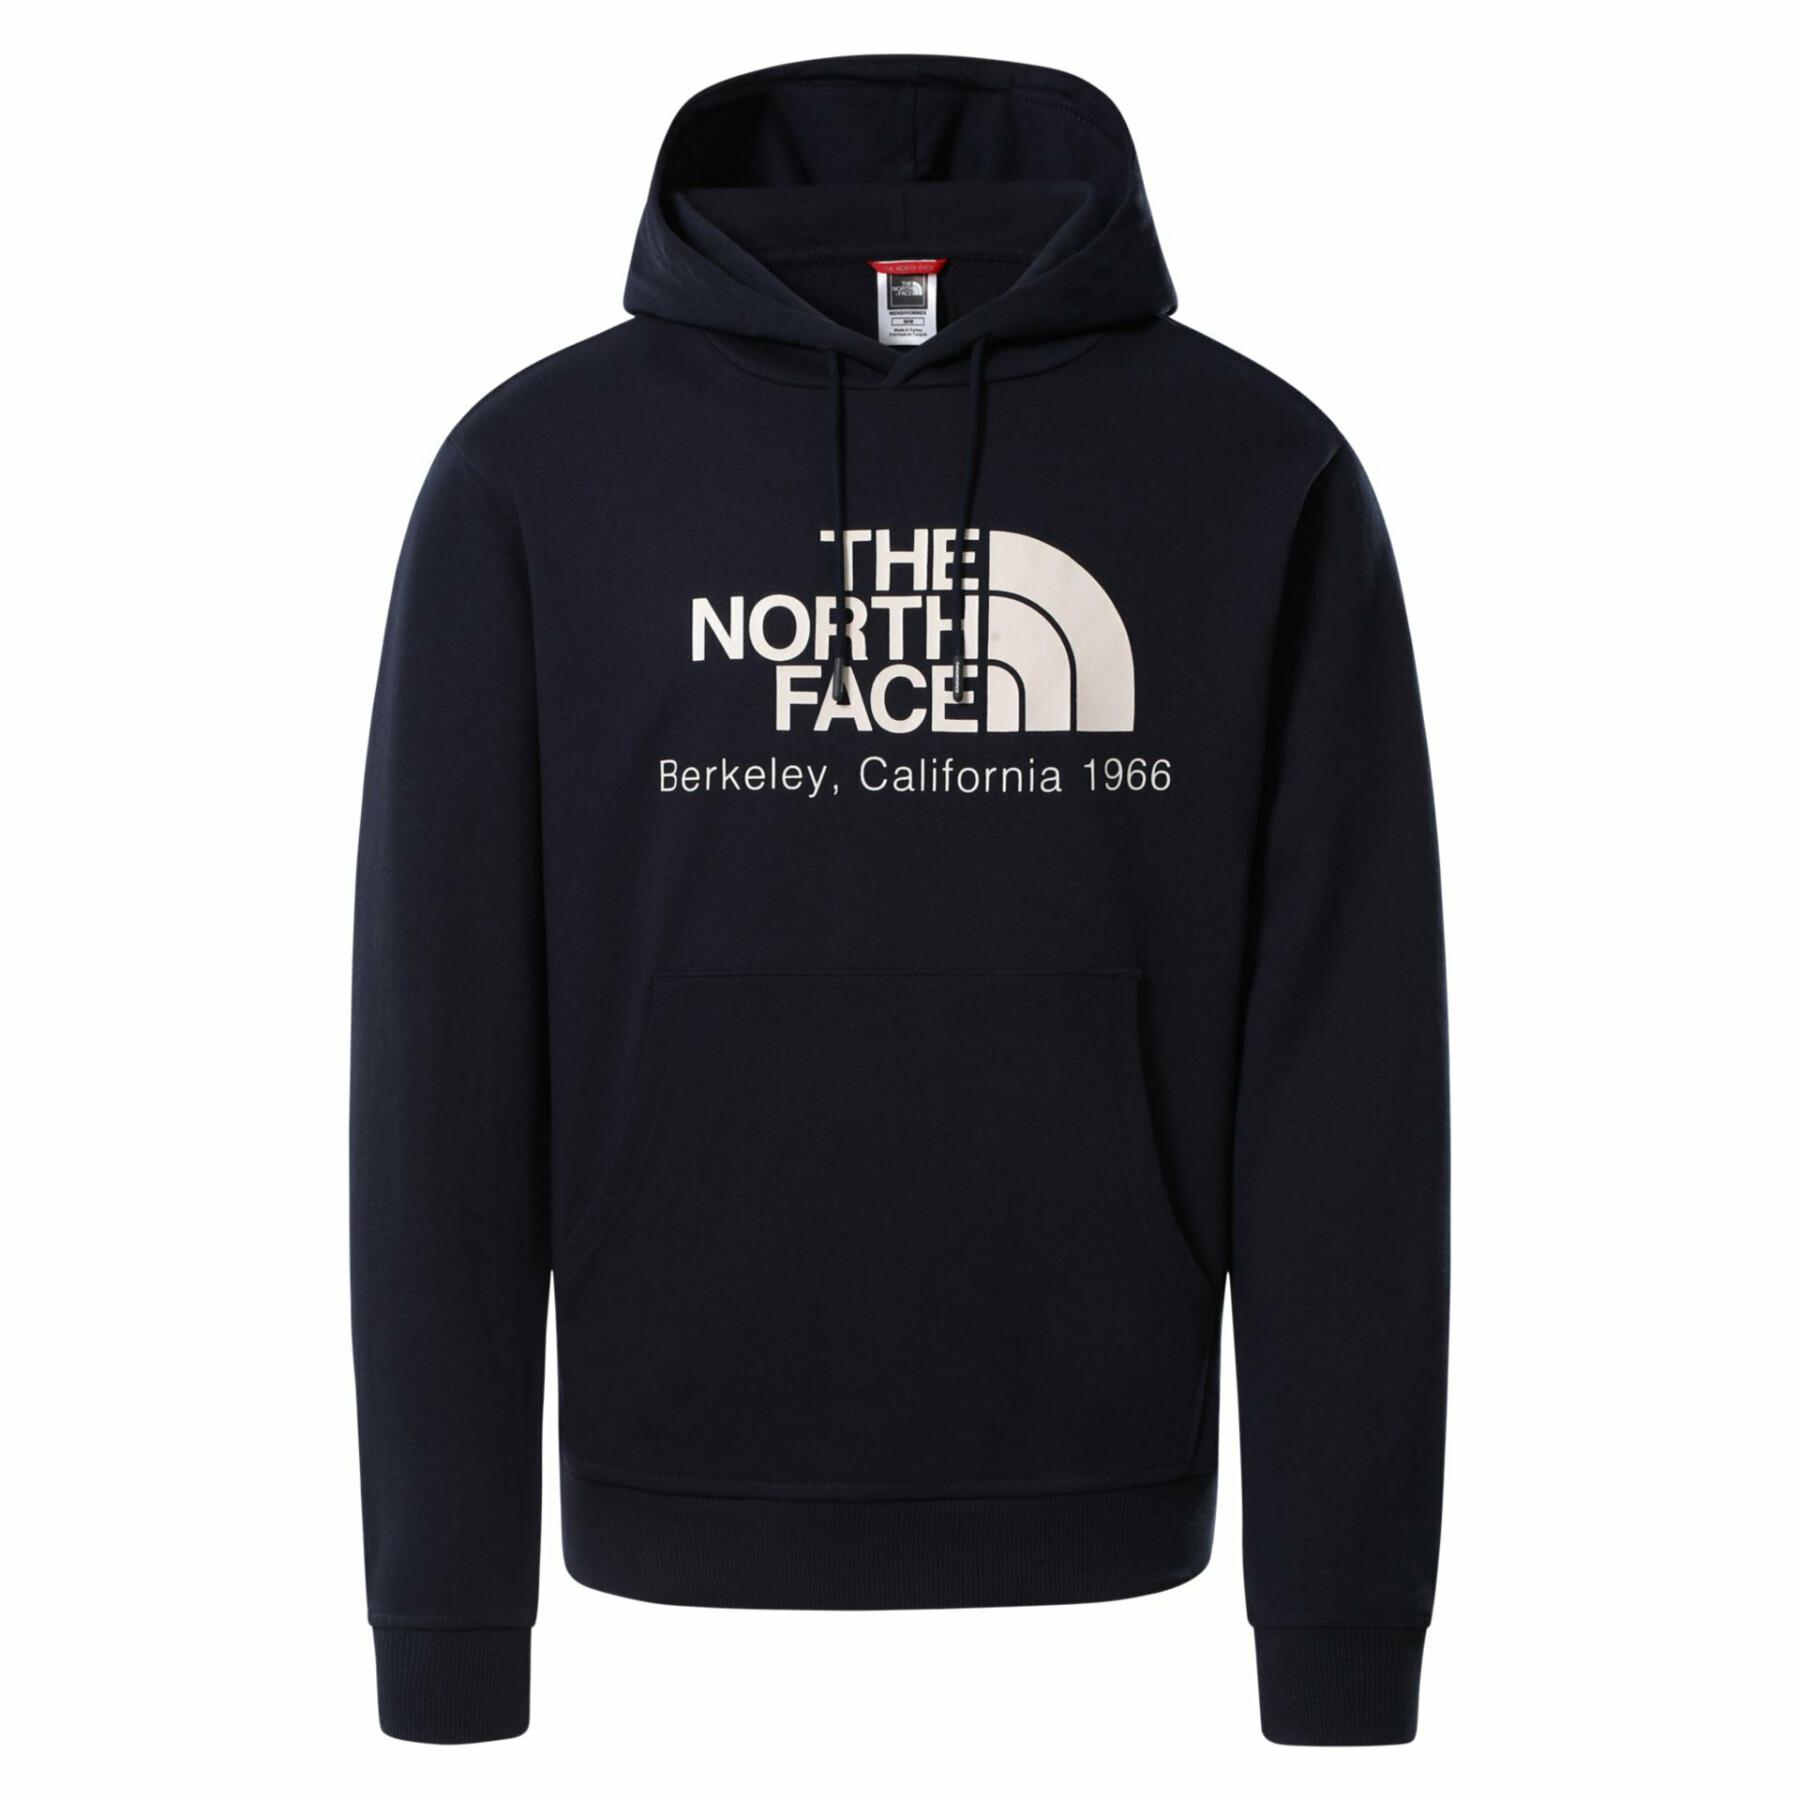 Sweatshirt The North Face Berkeley California